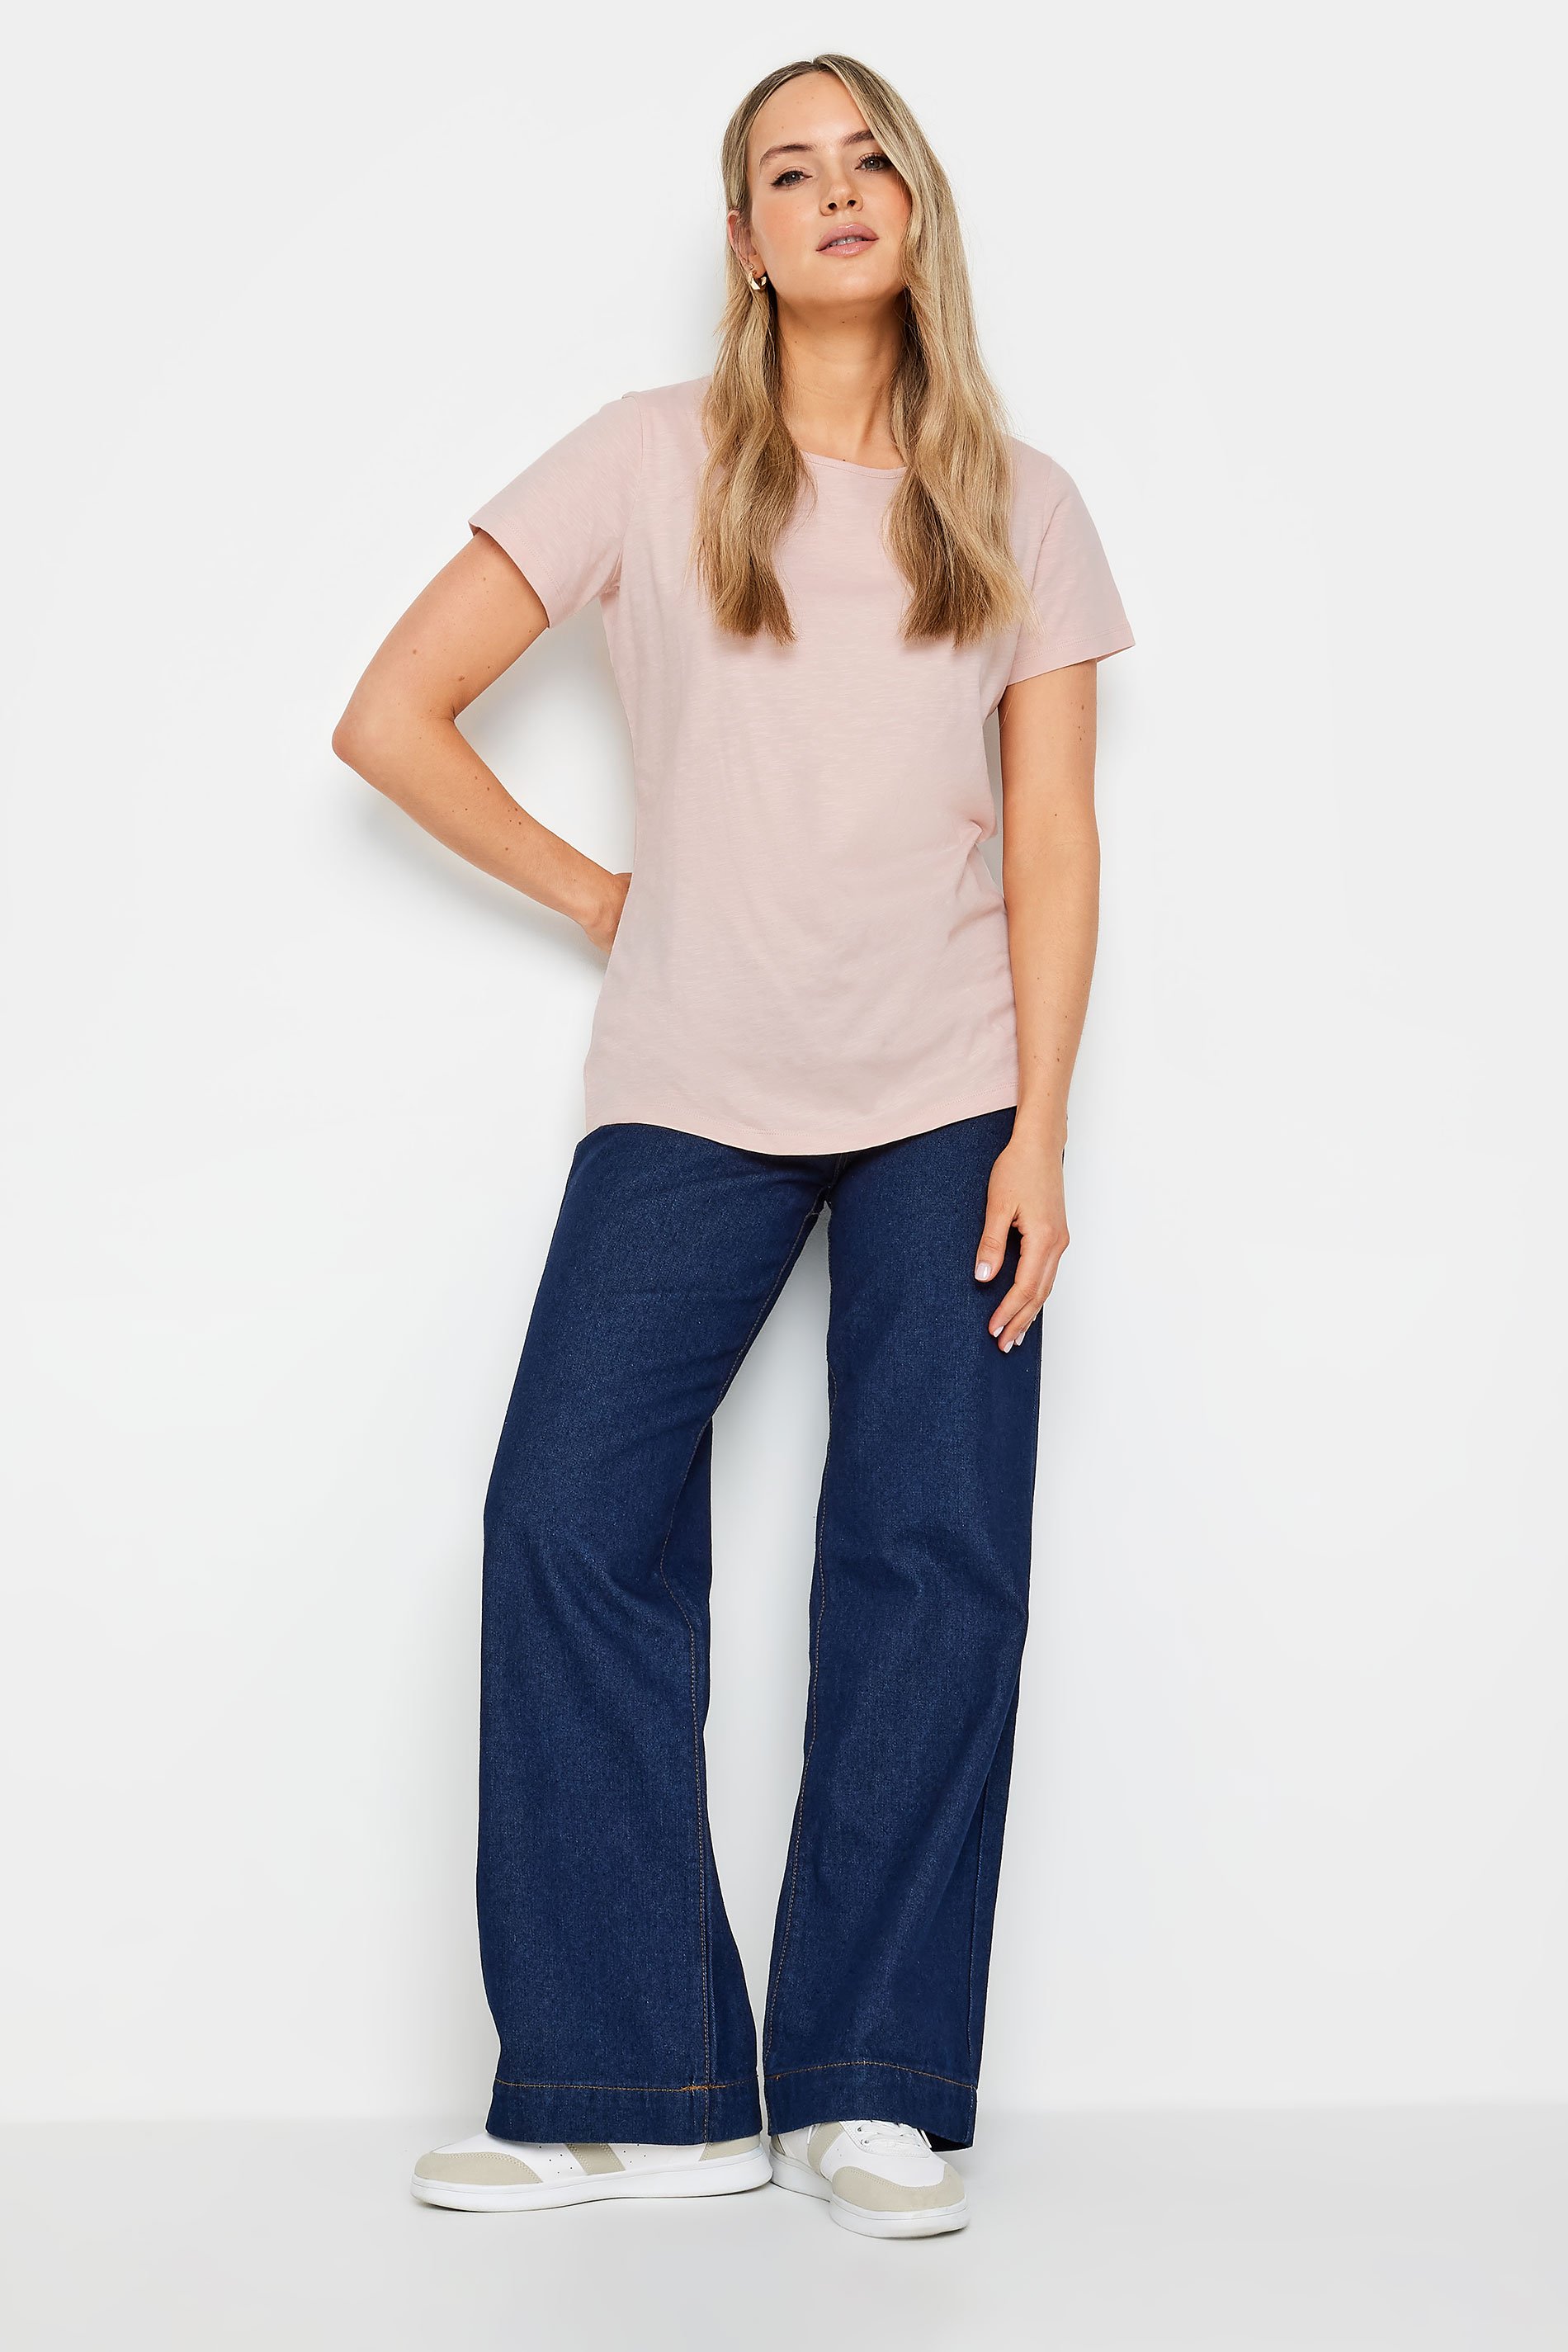 LTS Tall Womens Blush Pink Cotton T-Shirt | Long Tall Sally 2